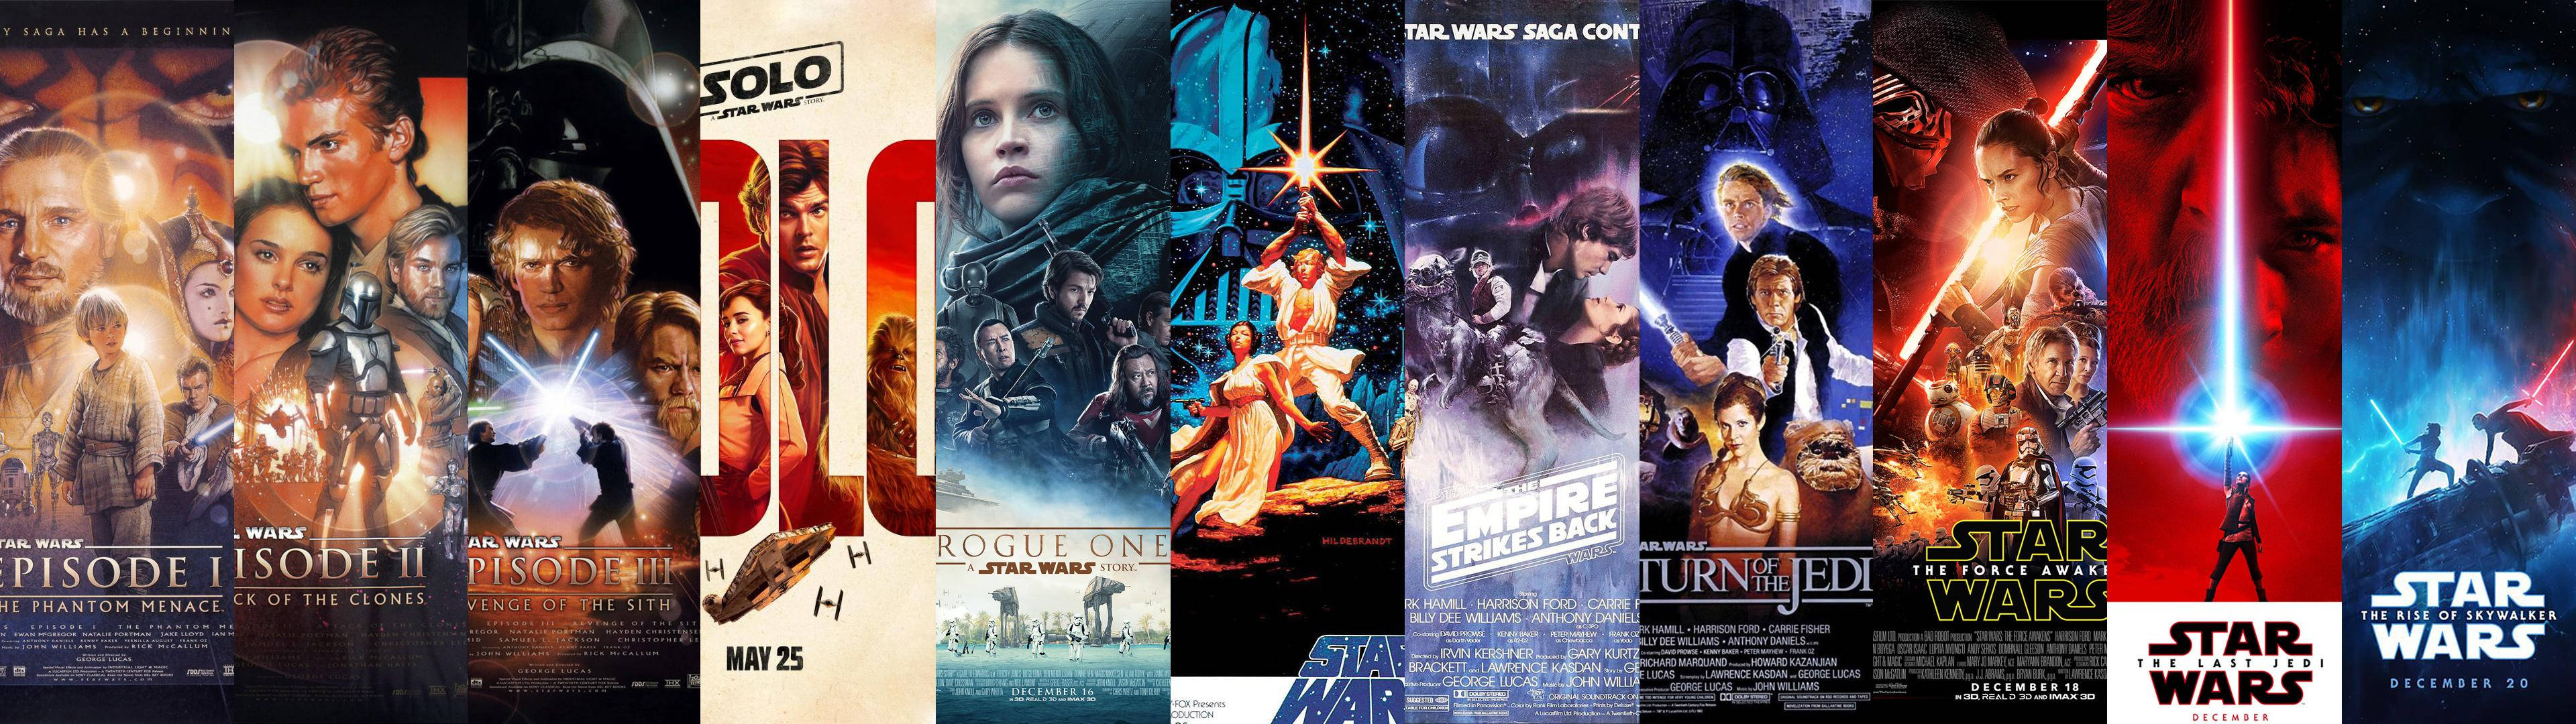 Star Wars Dual Screen Movie Posters Wallpaper